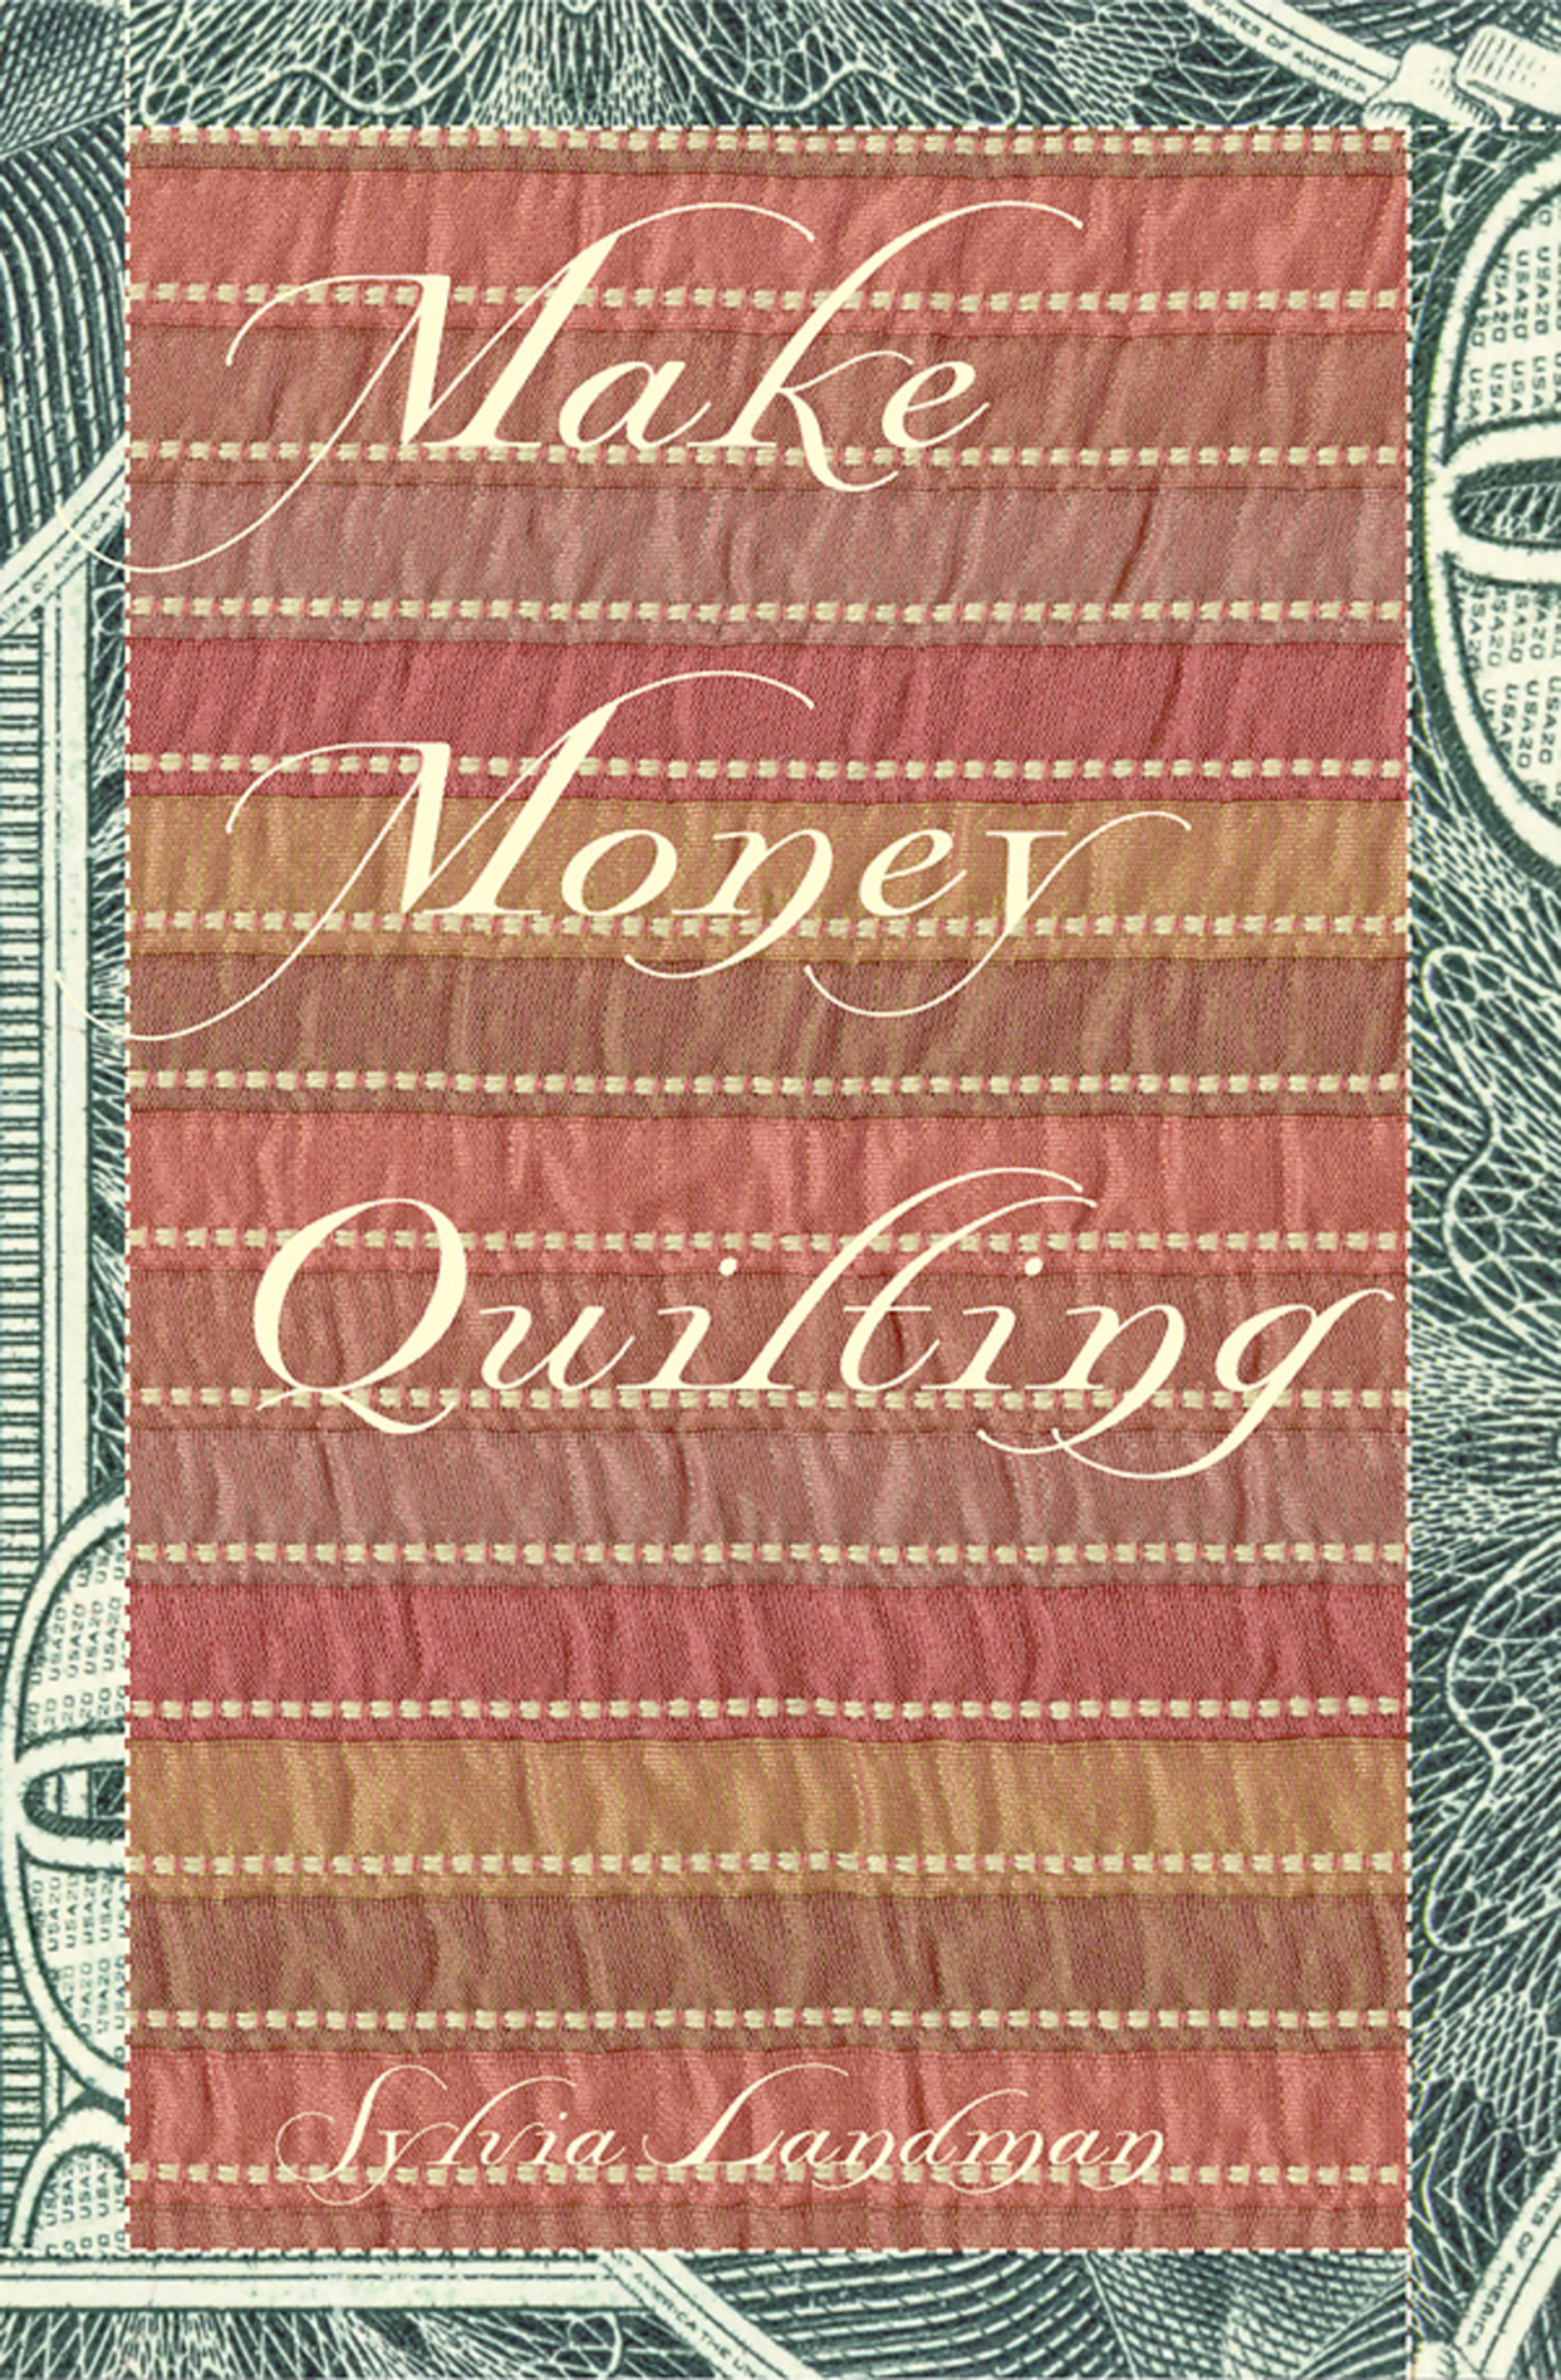 Make Money Quilting - 15-24.99